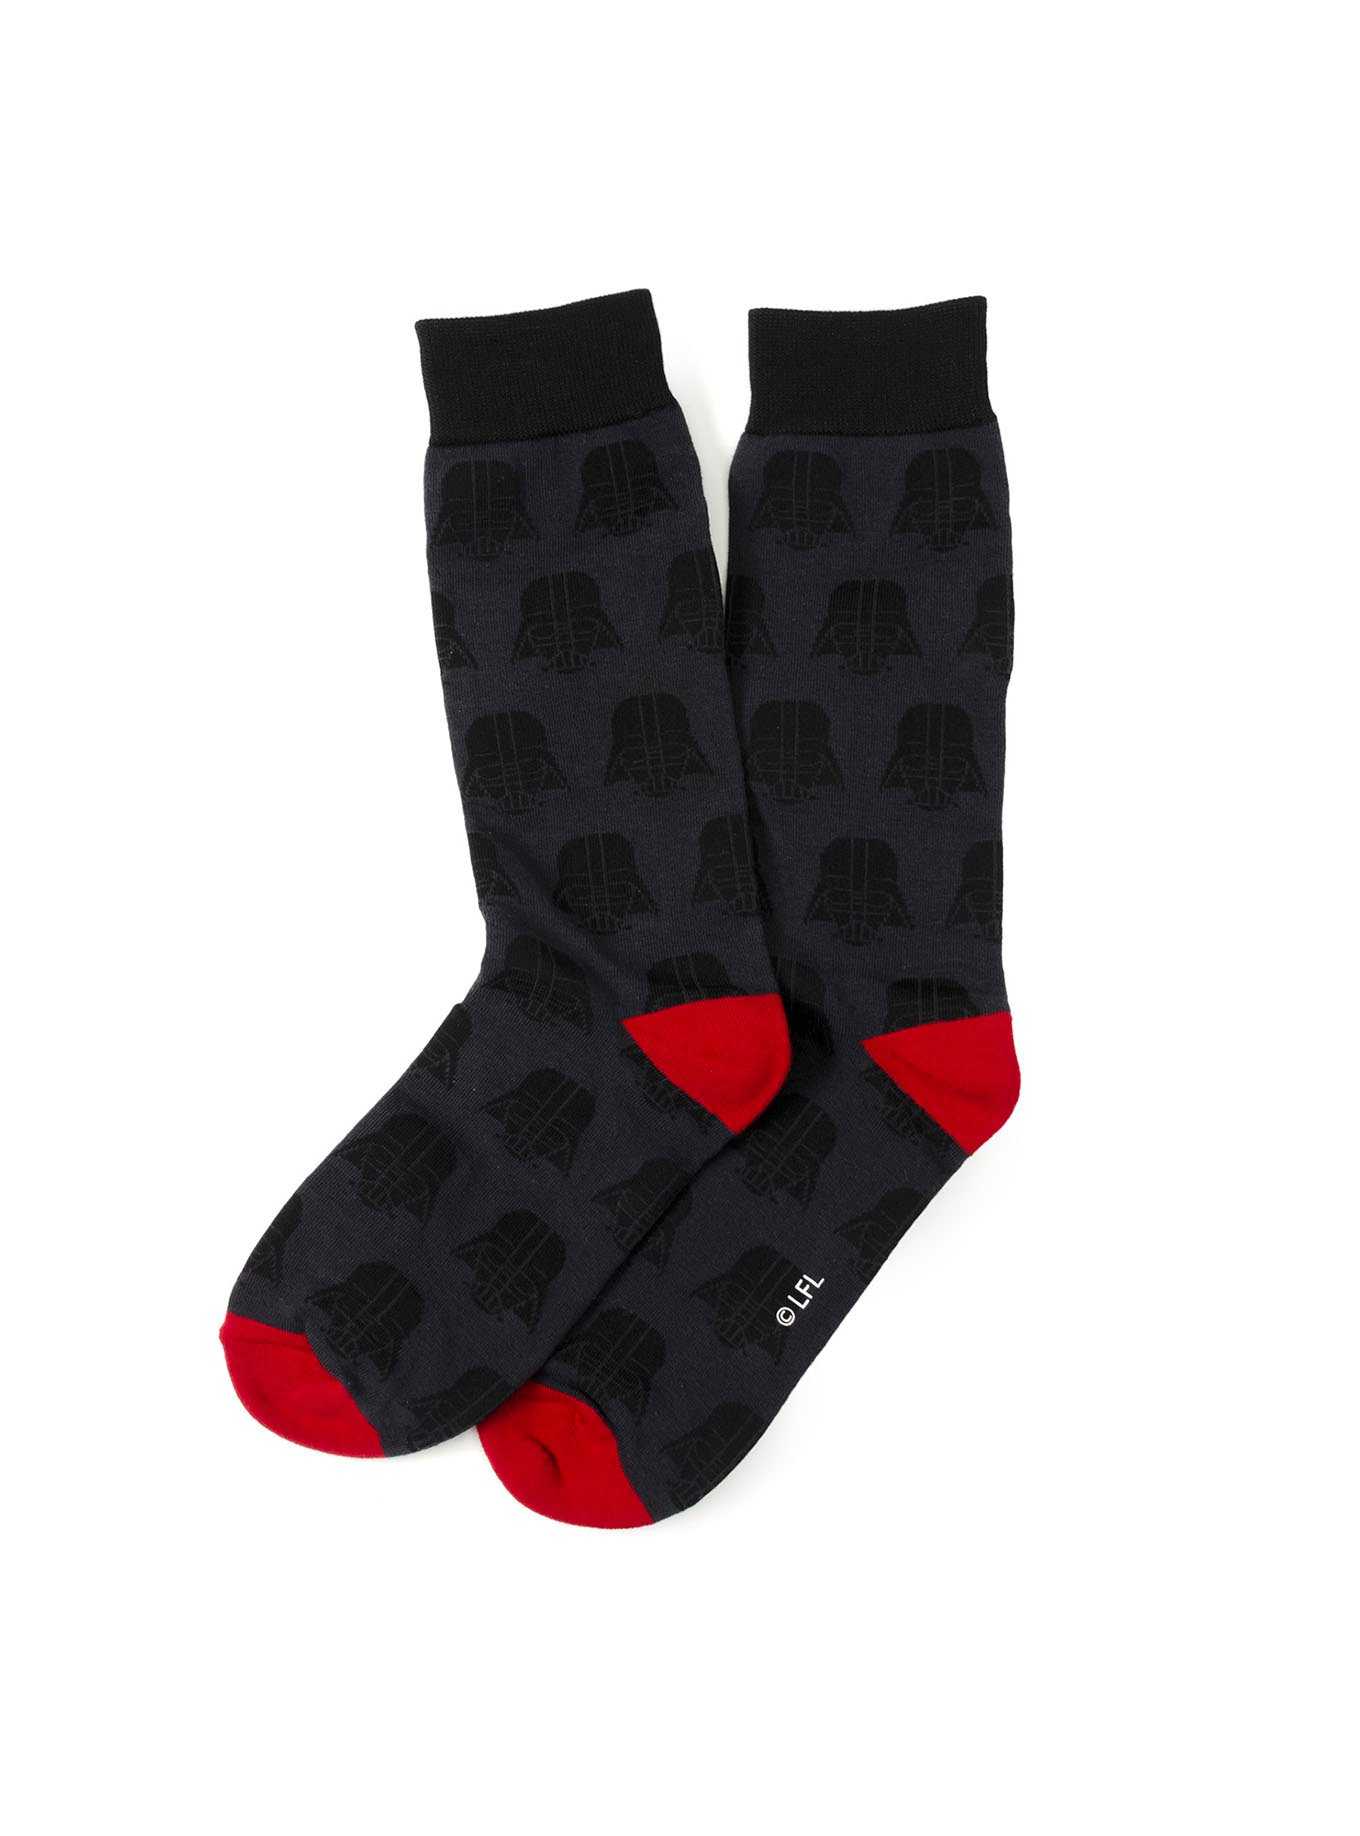 Star Wars Darth Vader Black and Red Men's Sock, , hi-res